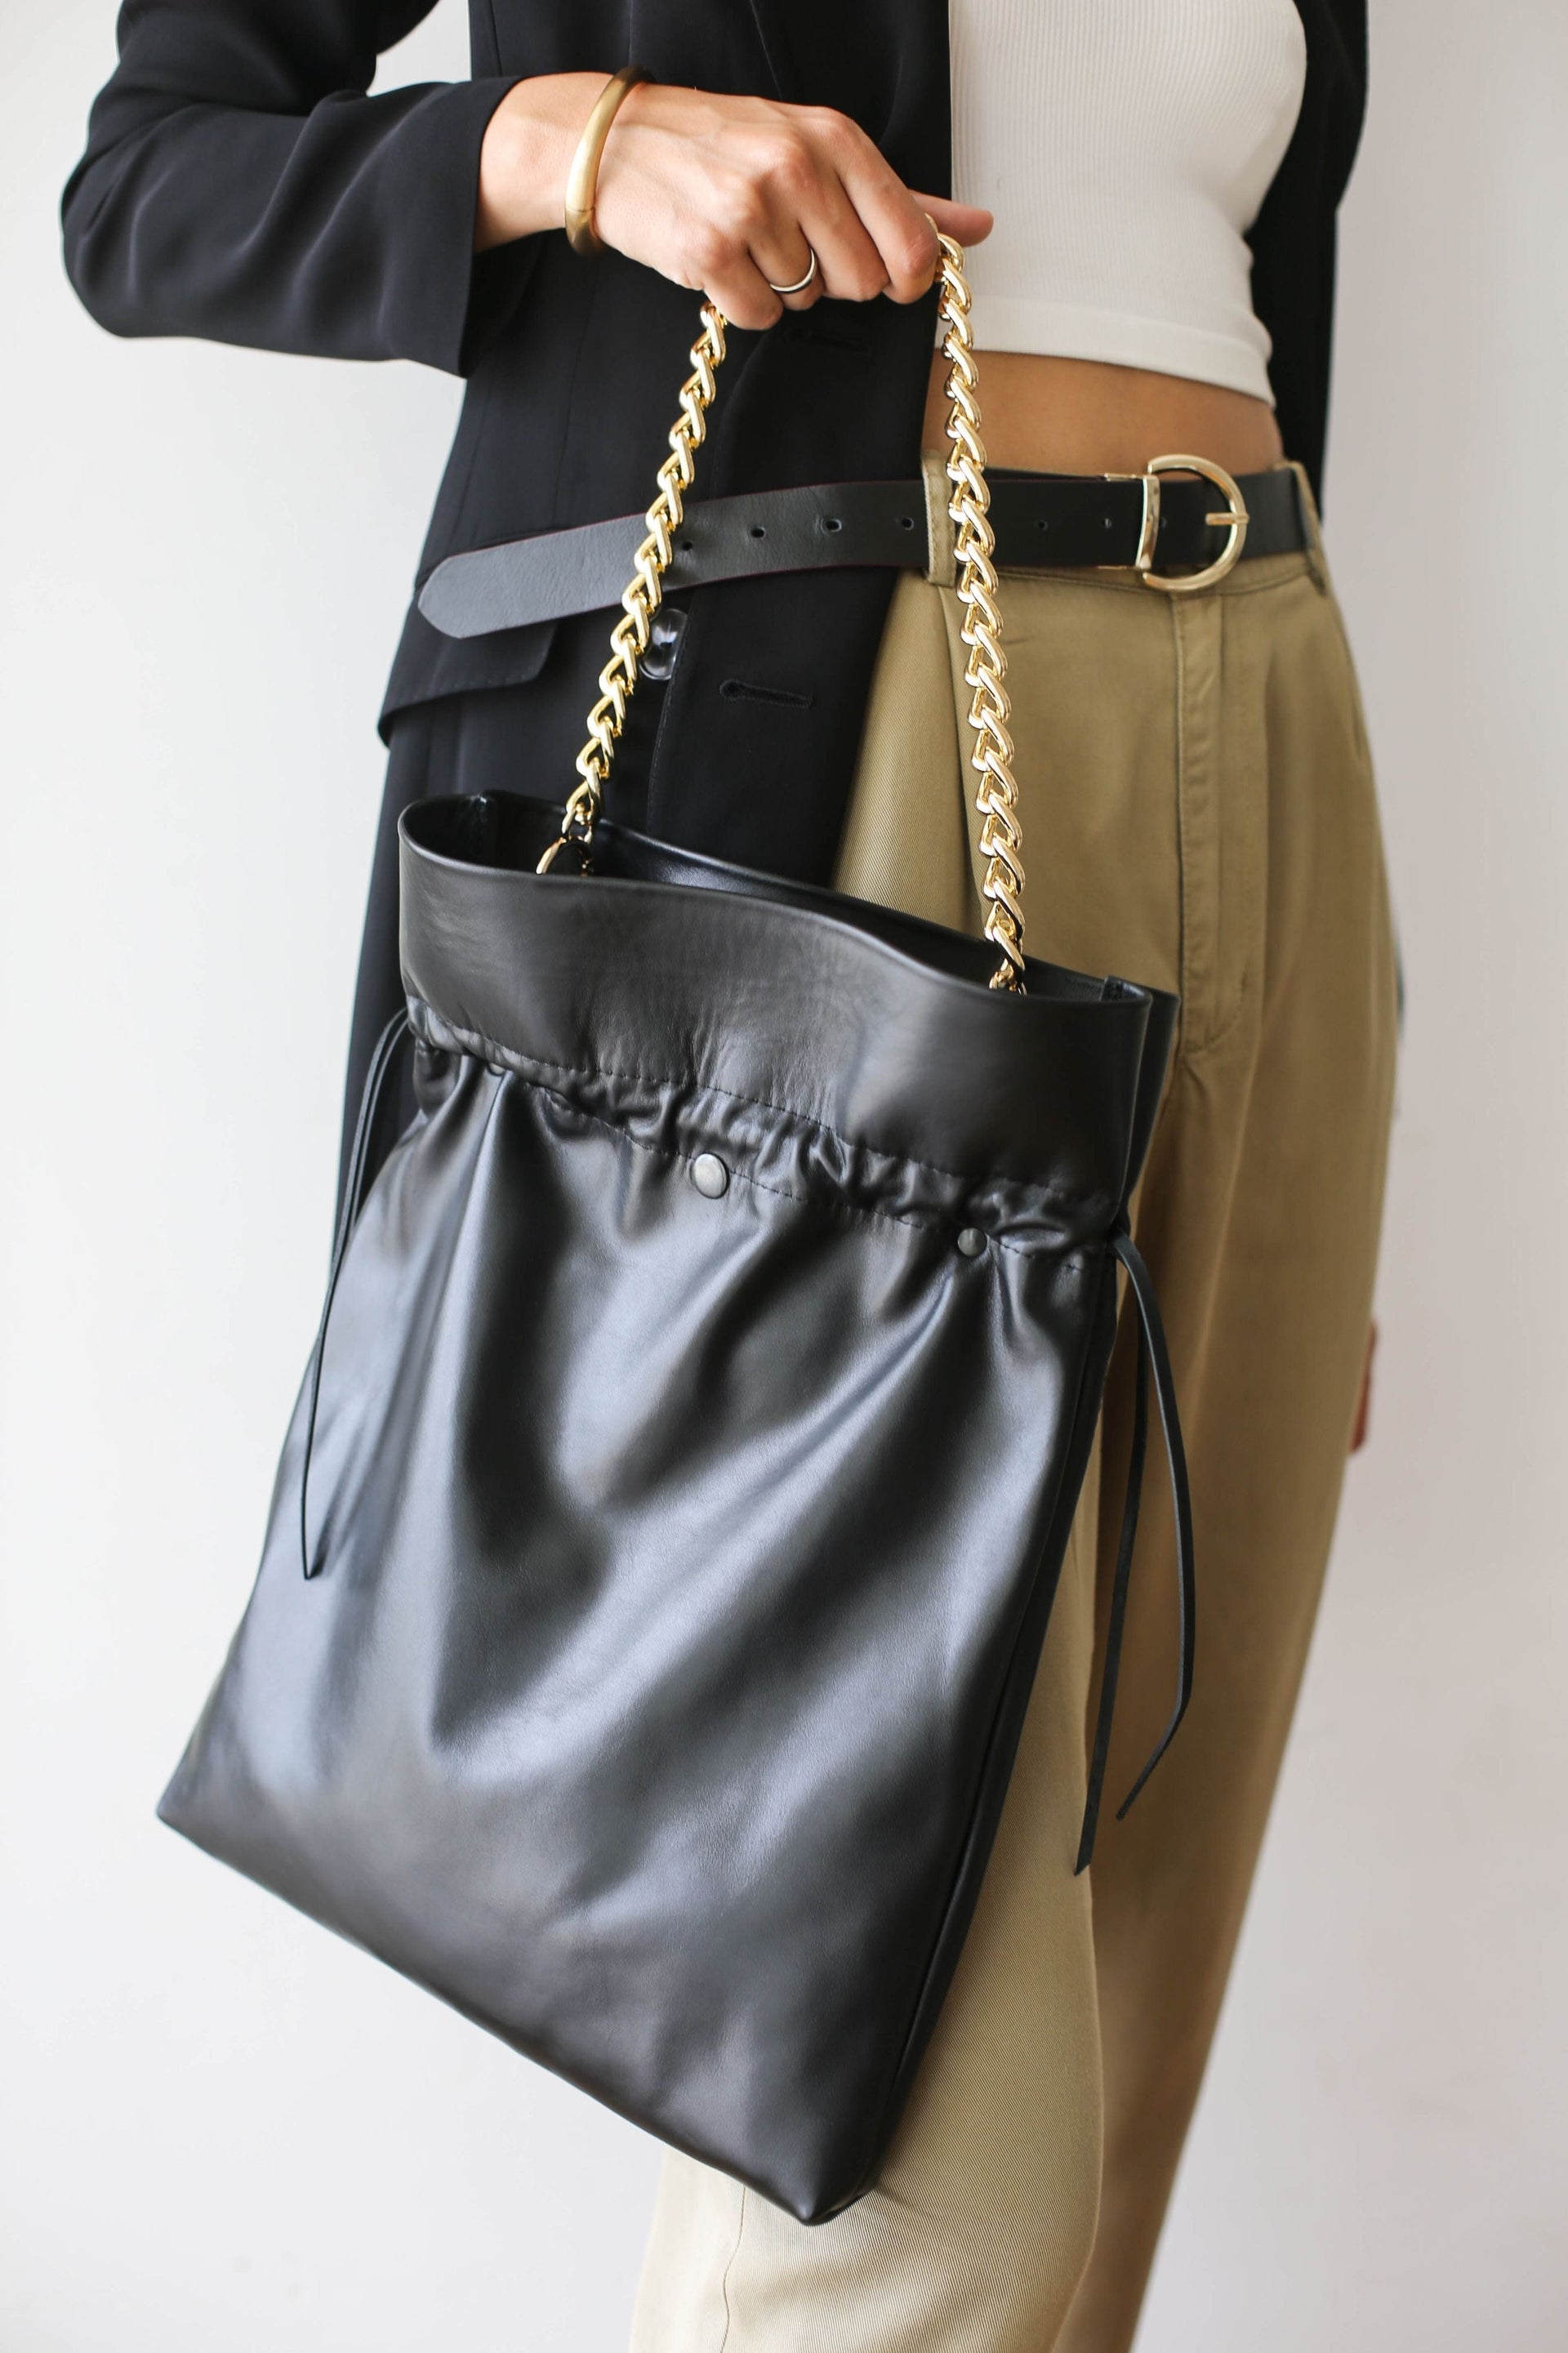 Black Leather Drawstring Backpack